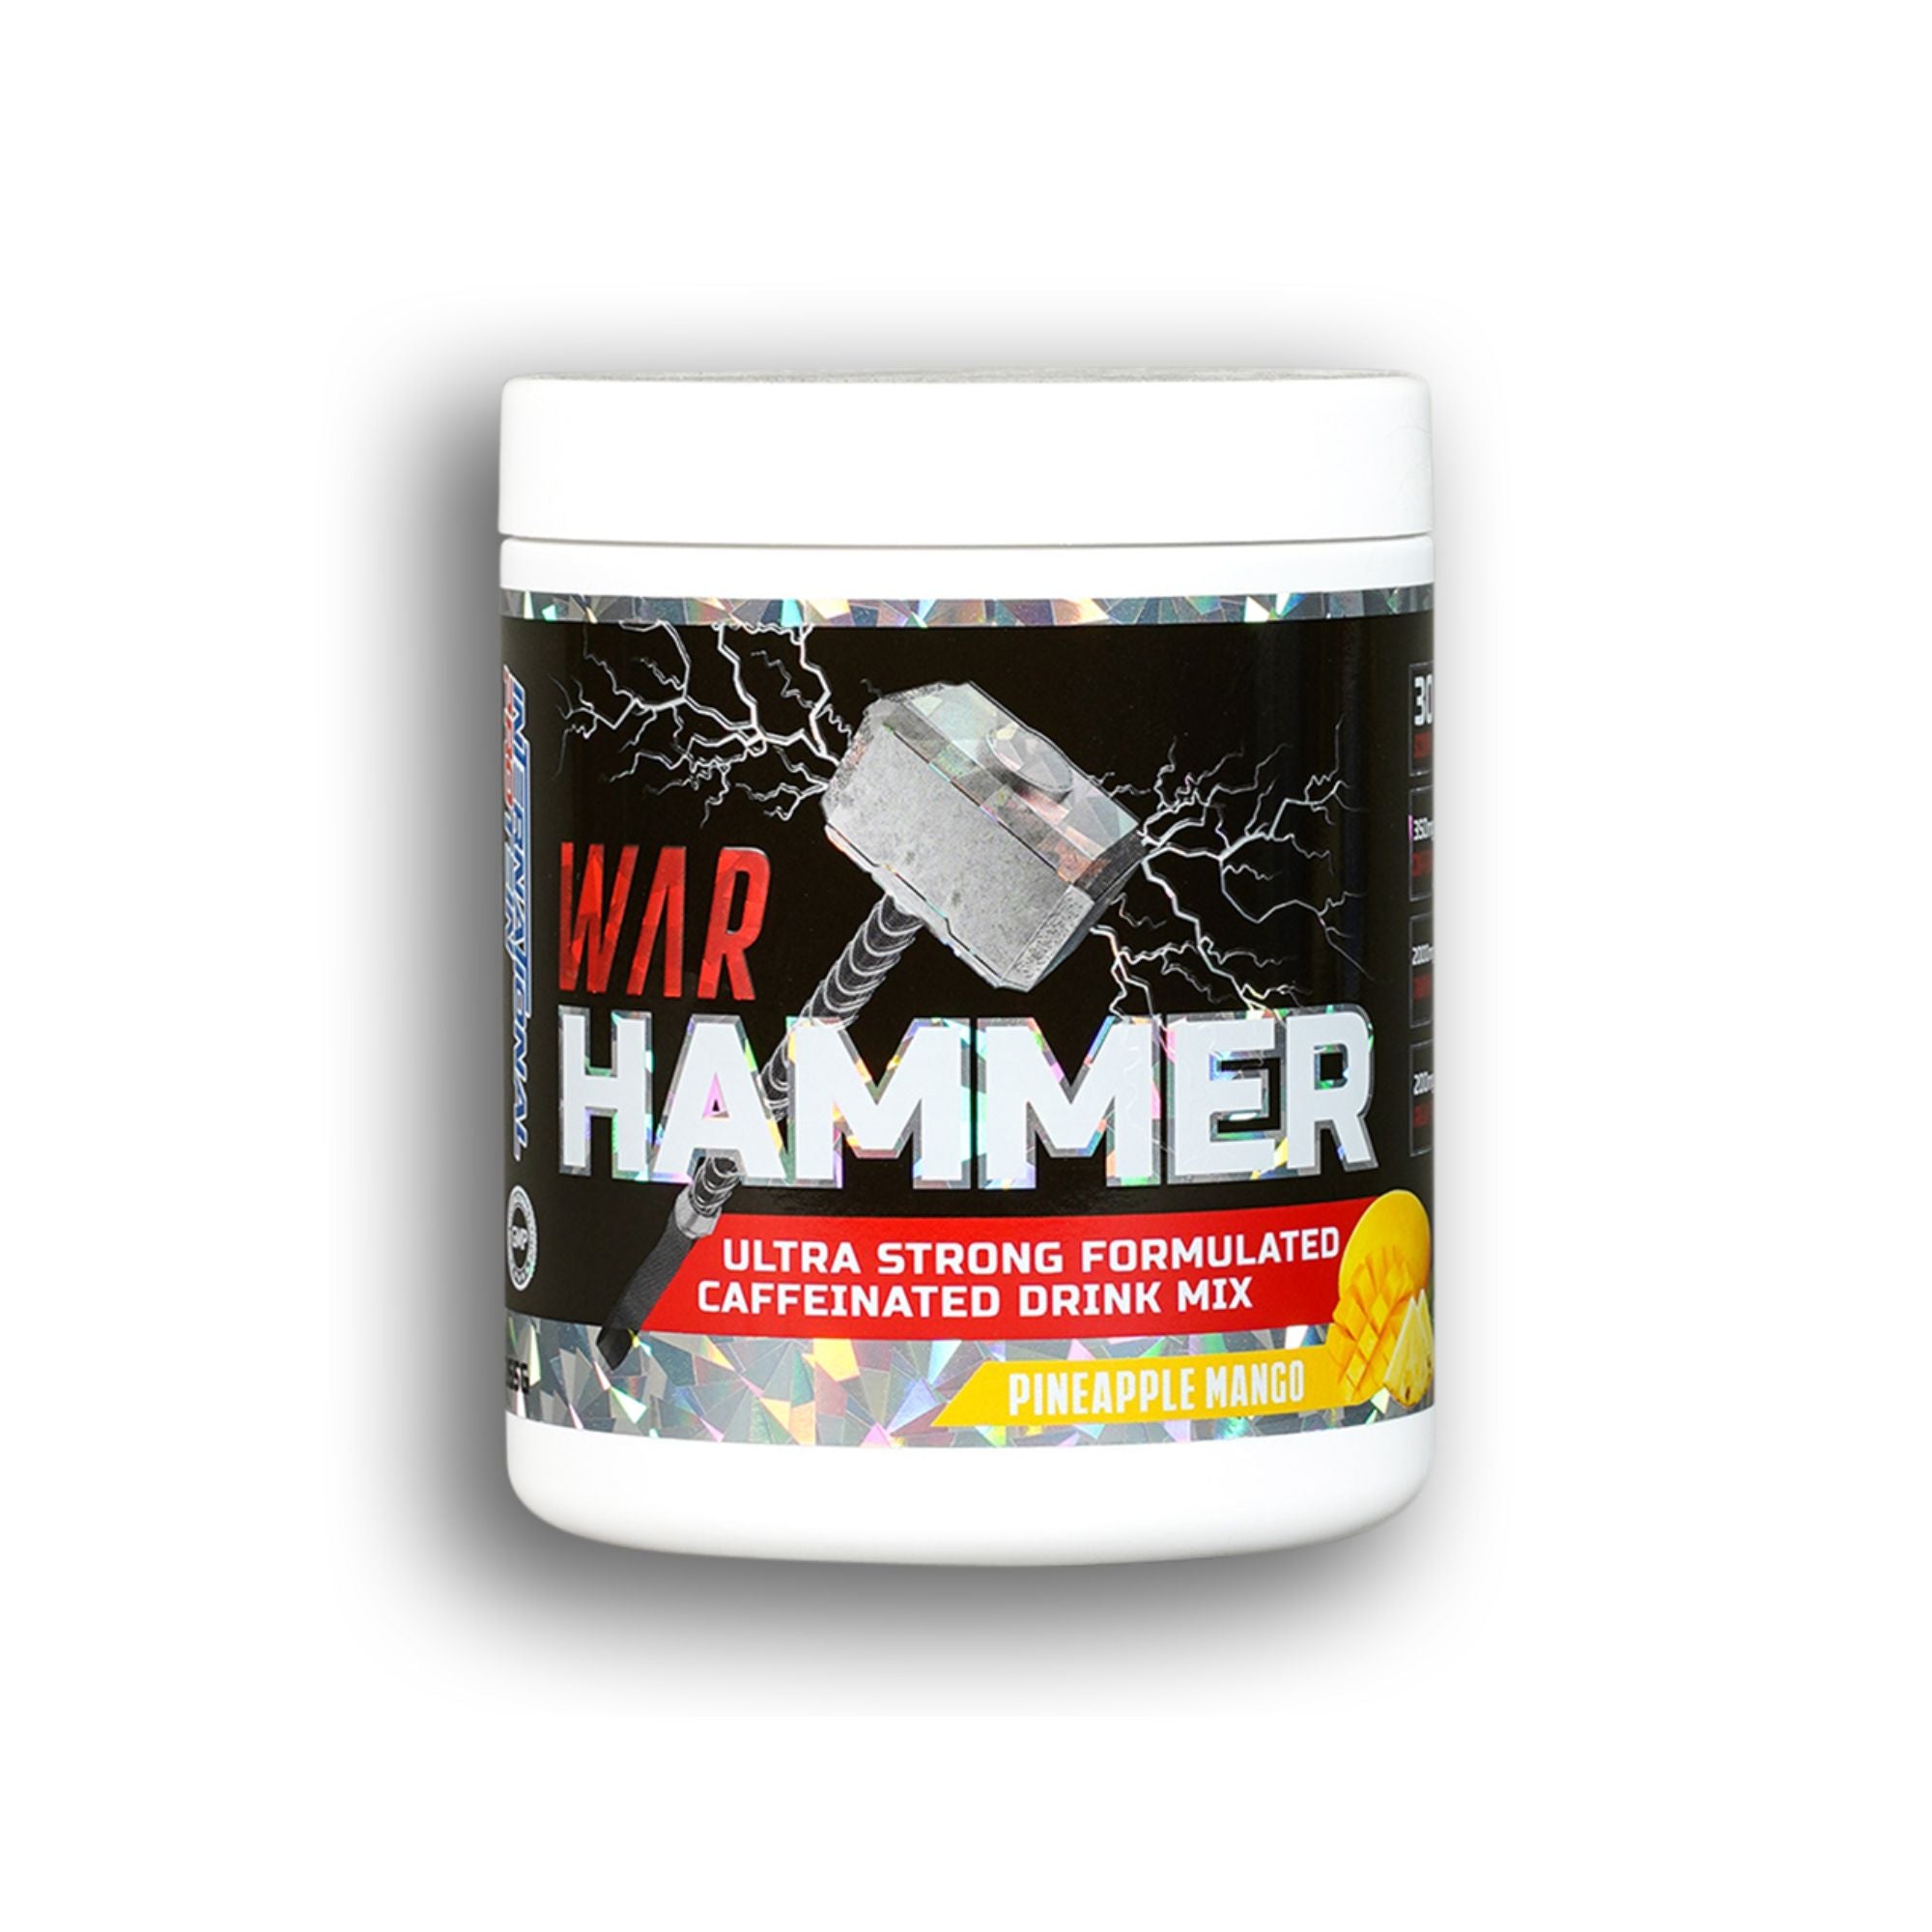 International Protein War Hammer PWO Pre Workout